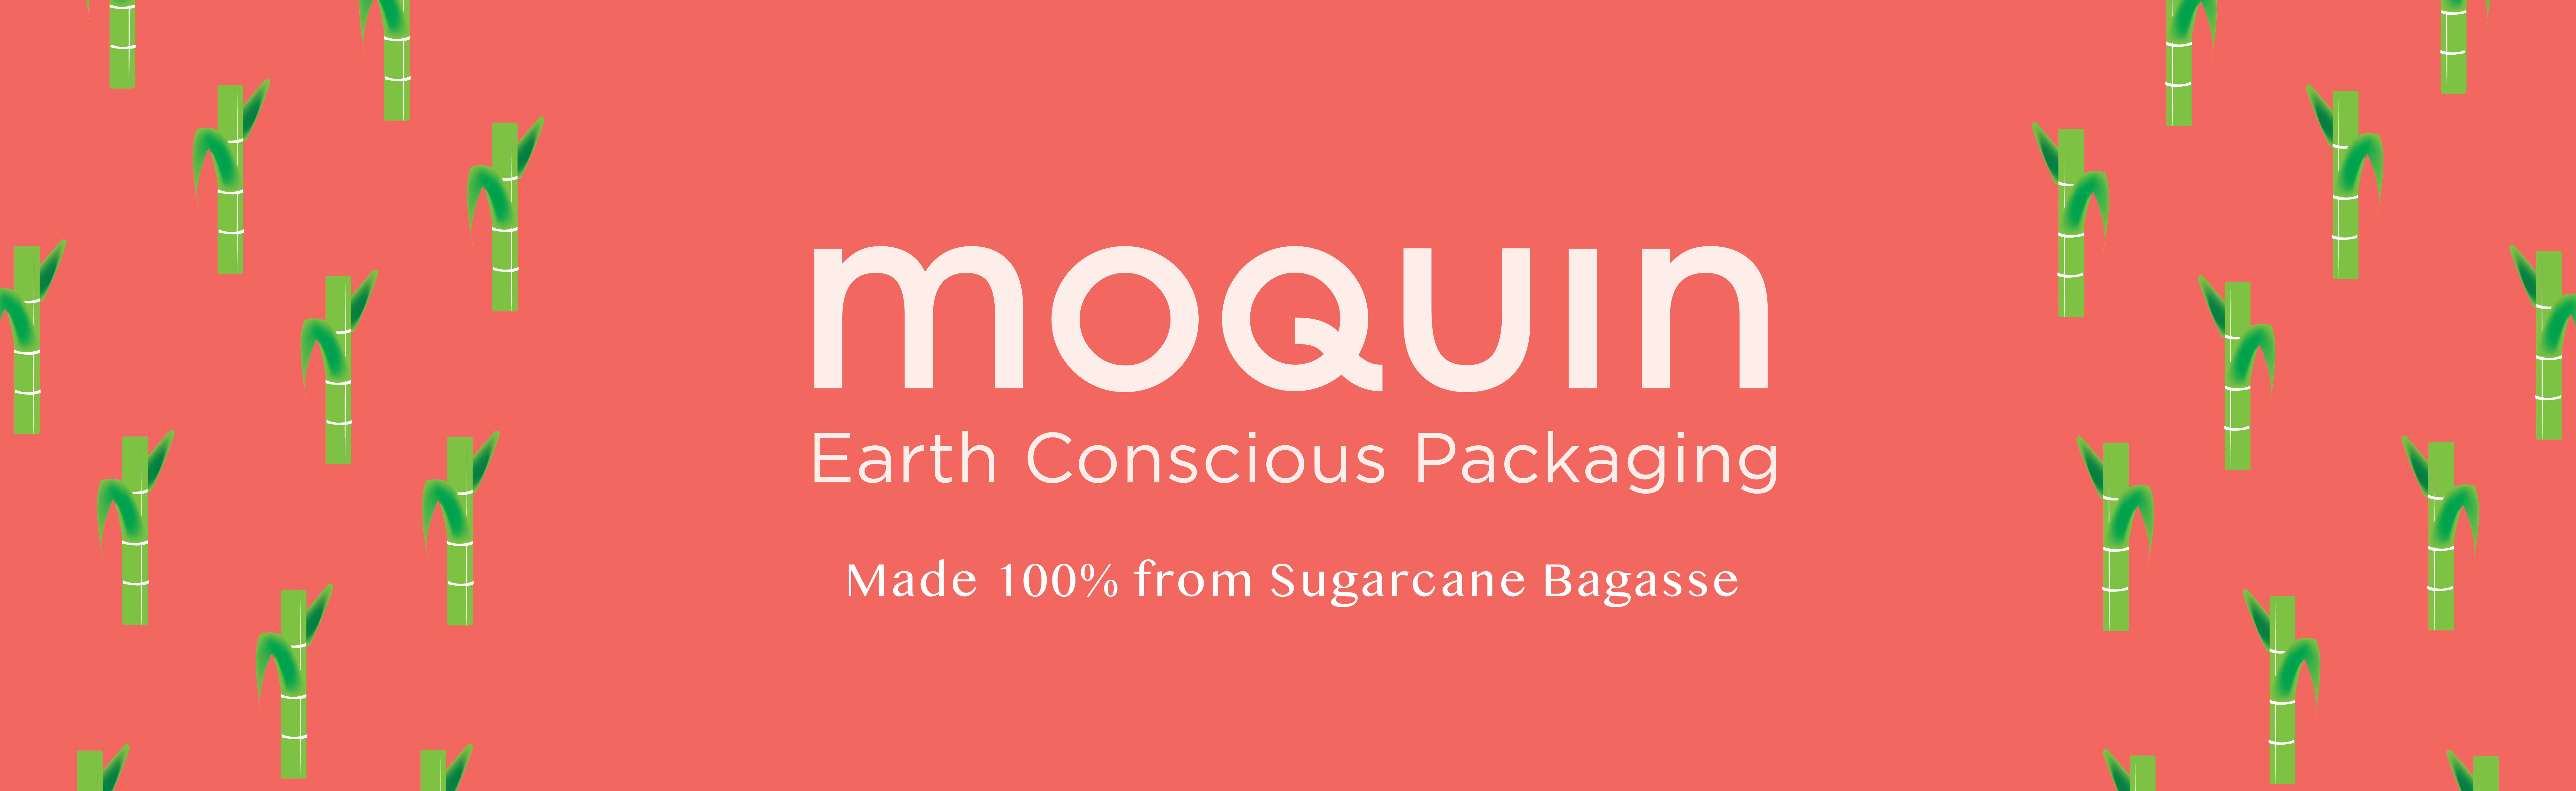 sugarcane bagasse packaging